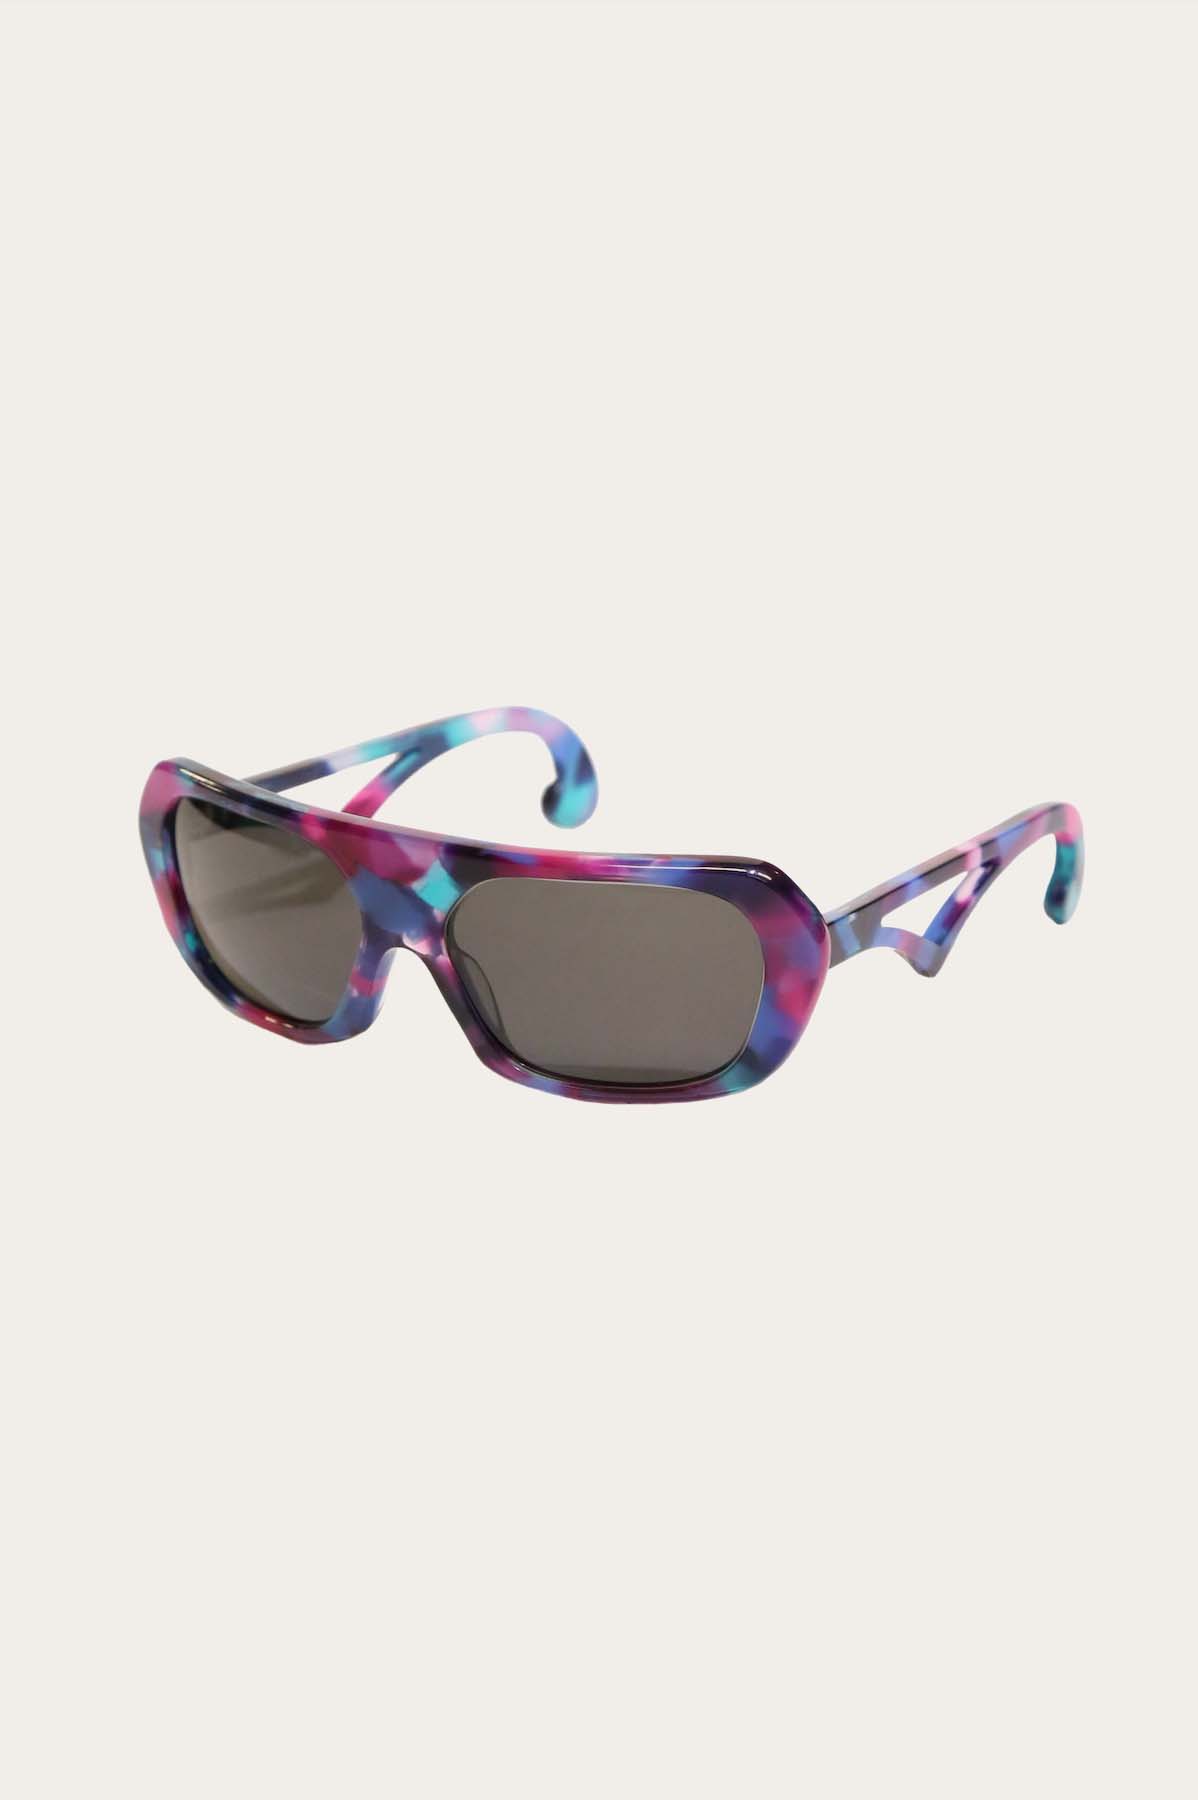  Pink Blue Camo, large eyeglass frame, custom-made Mod eyewear straight off our Fall 2019 Runway